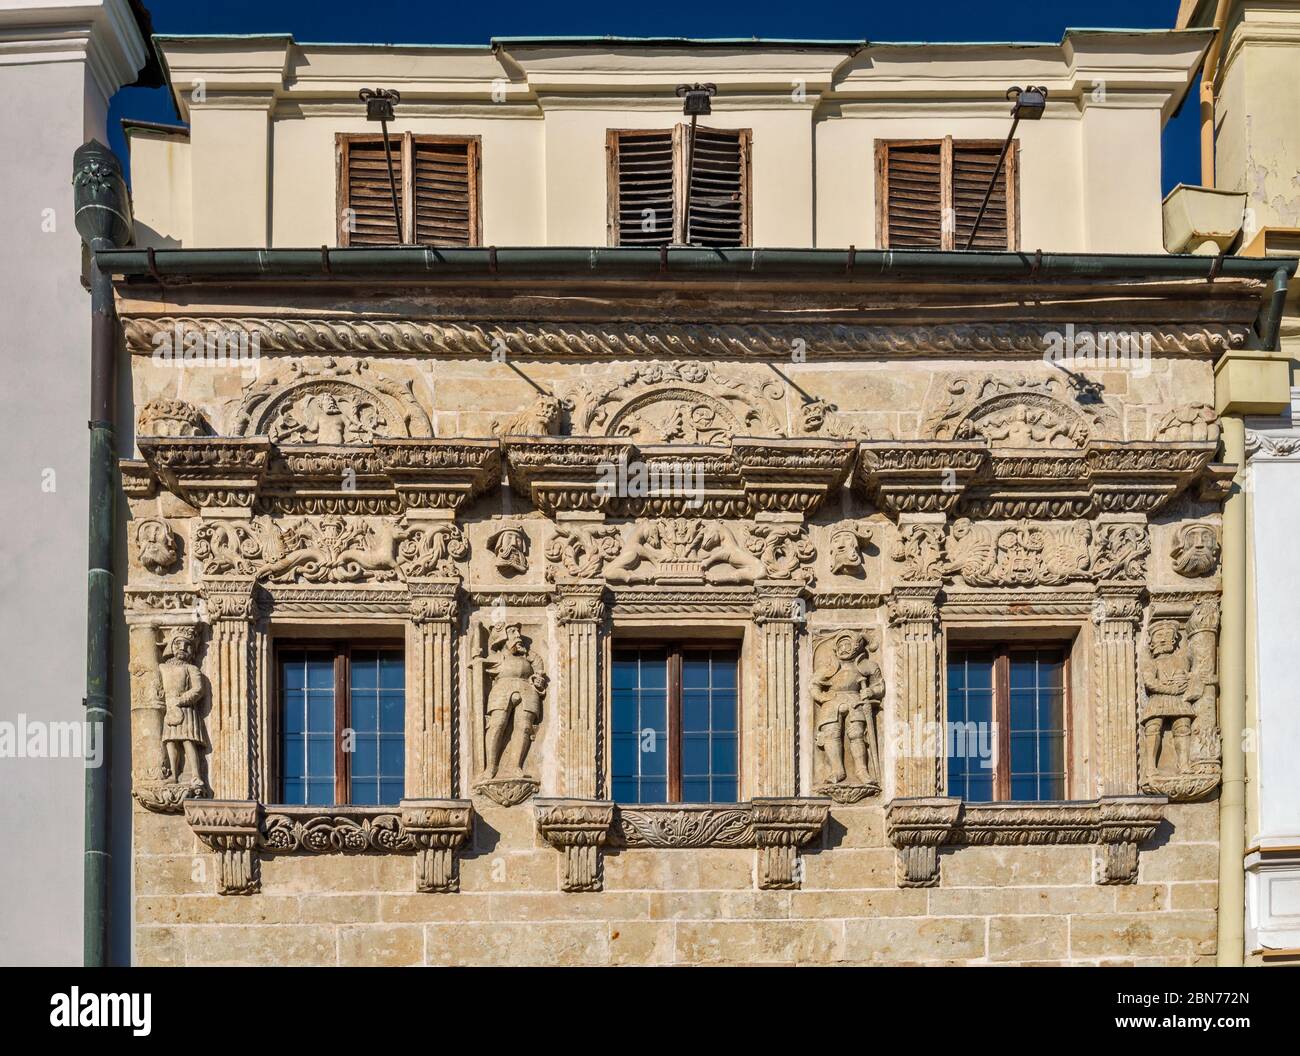 At the Knights house (U Rytiru) facade, Renaissance style, in Litomysl, Bohemia, Czech Republic, Central Europe Stock Photo